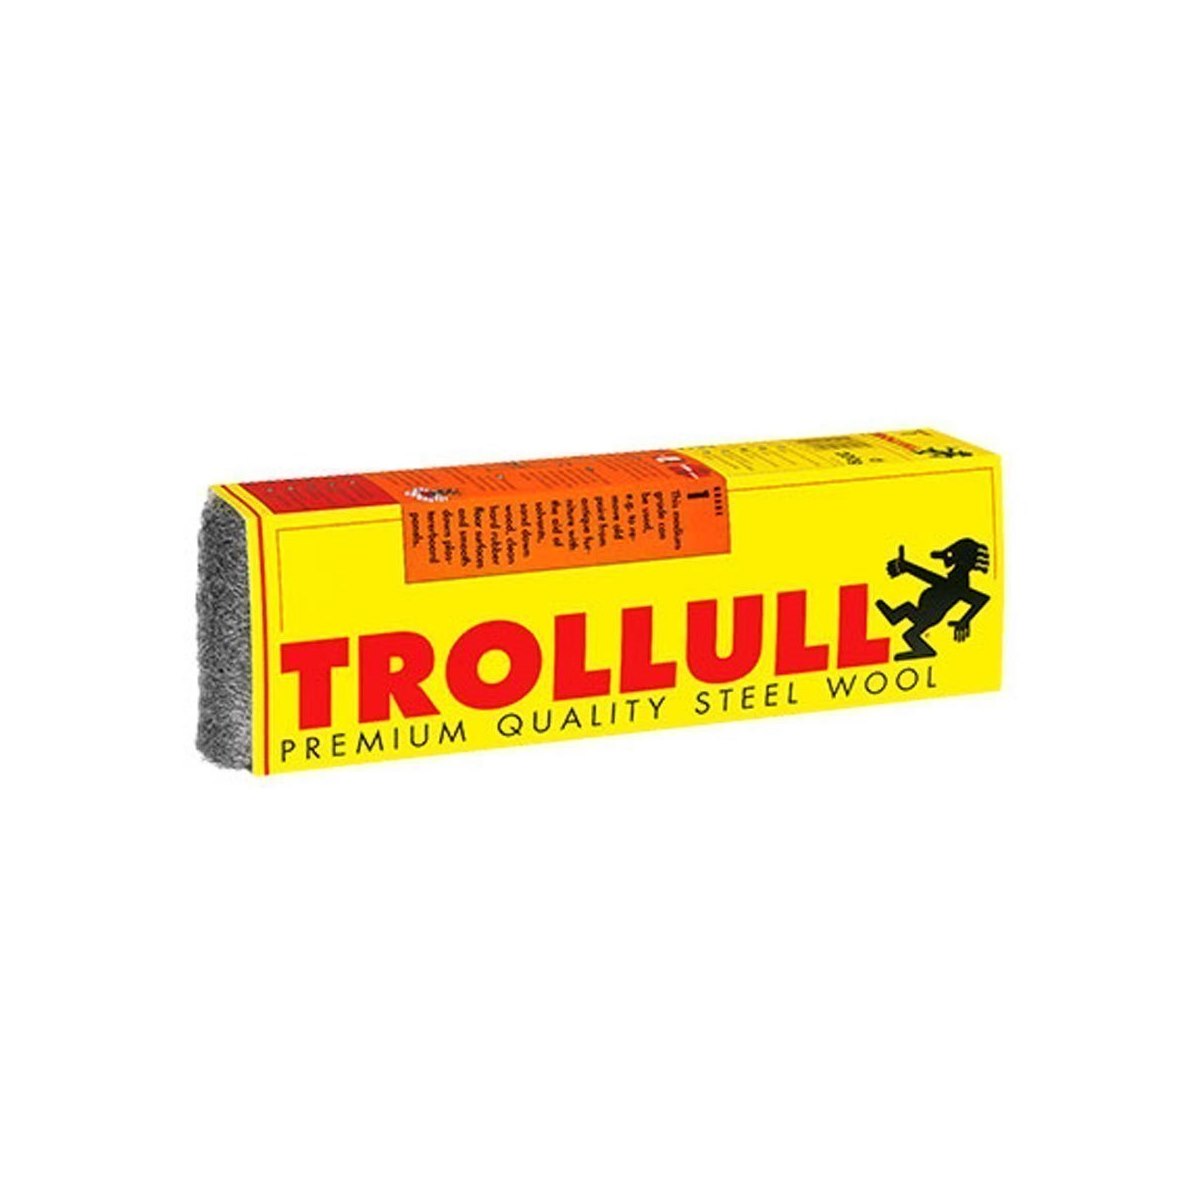 Trollull Steel Wool 200g Sleeve 5